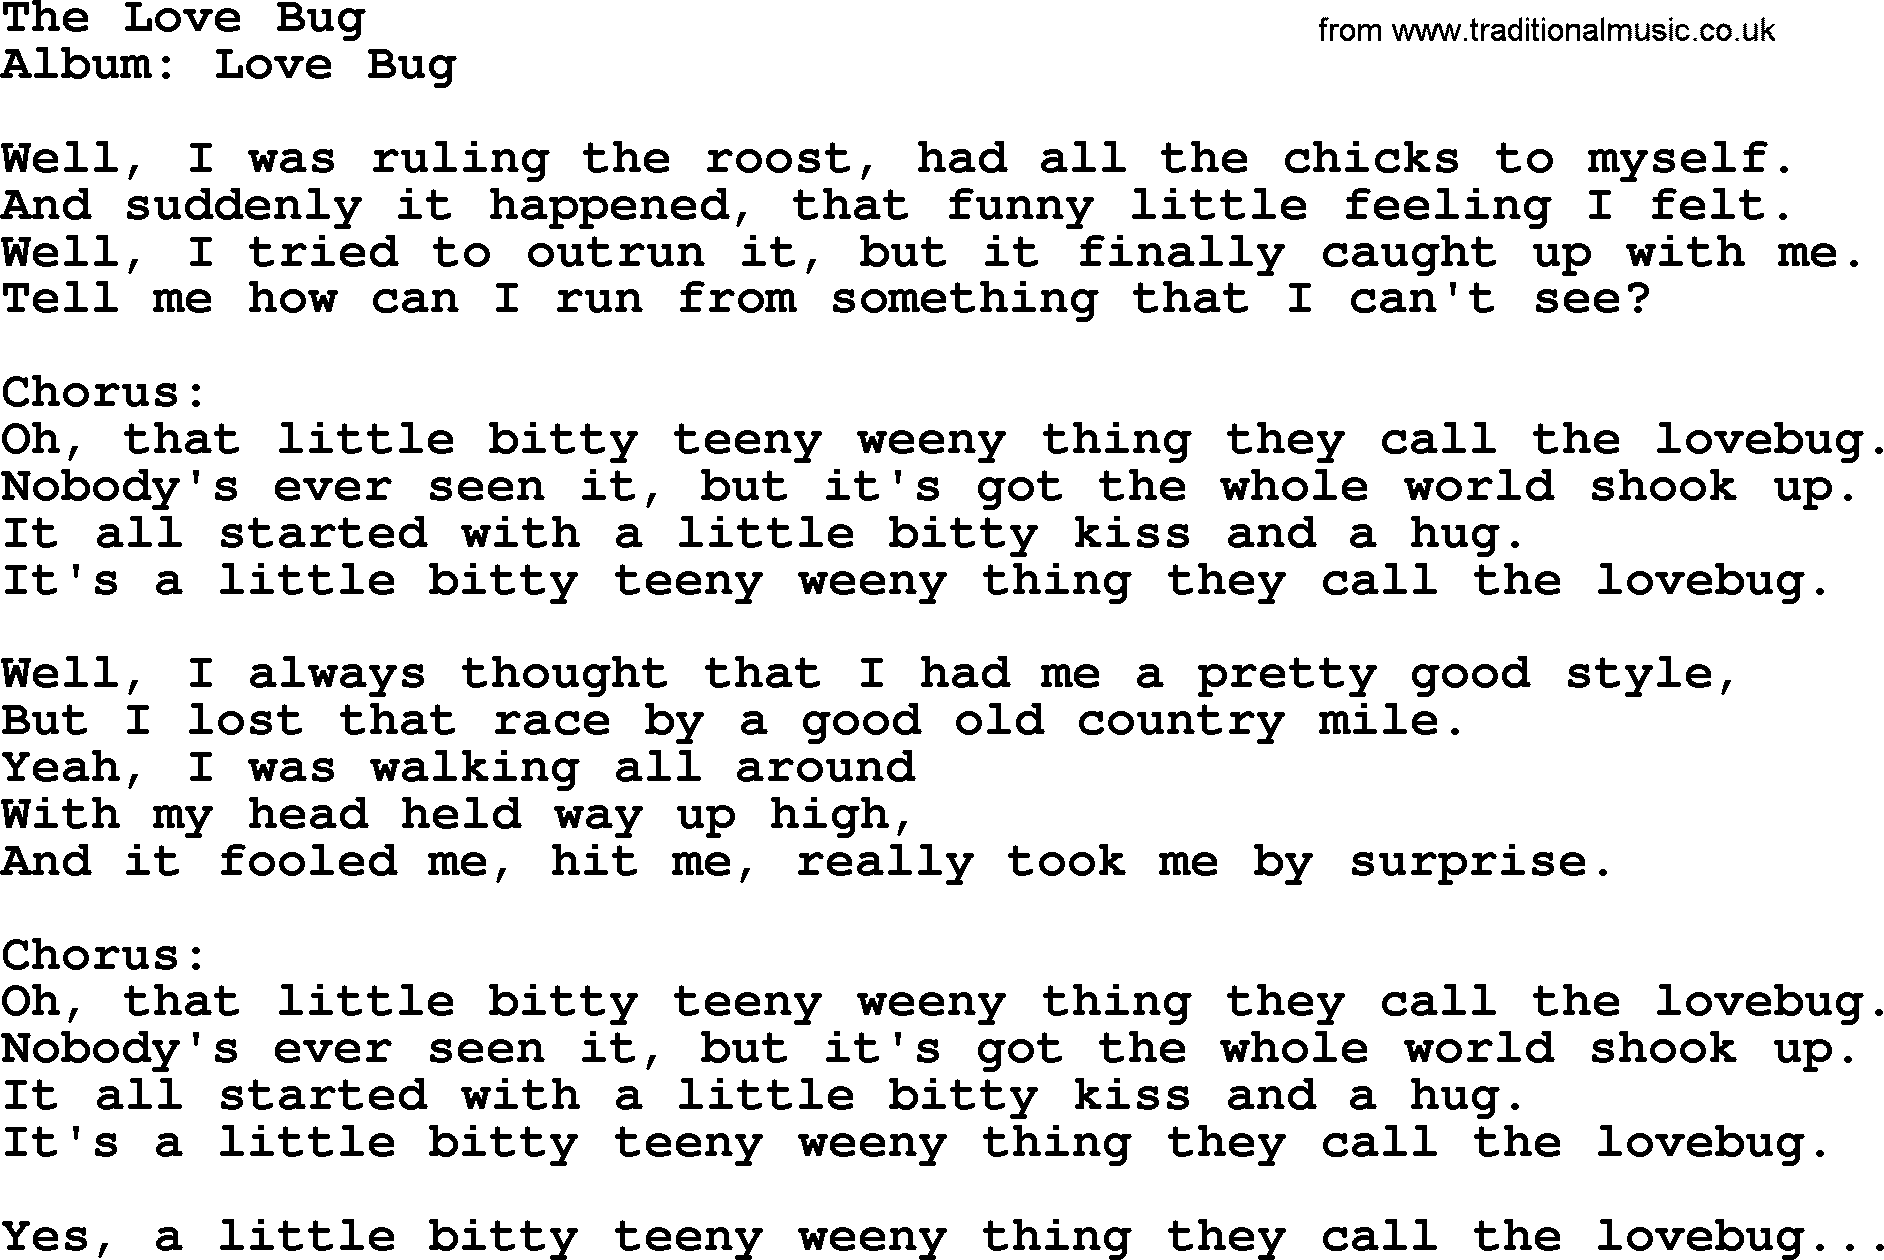 George Jones song: The Love Bug, lyrics